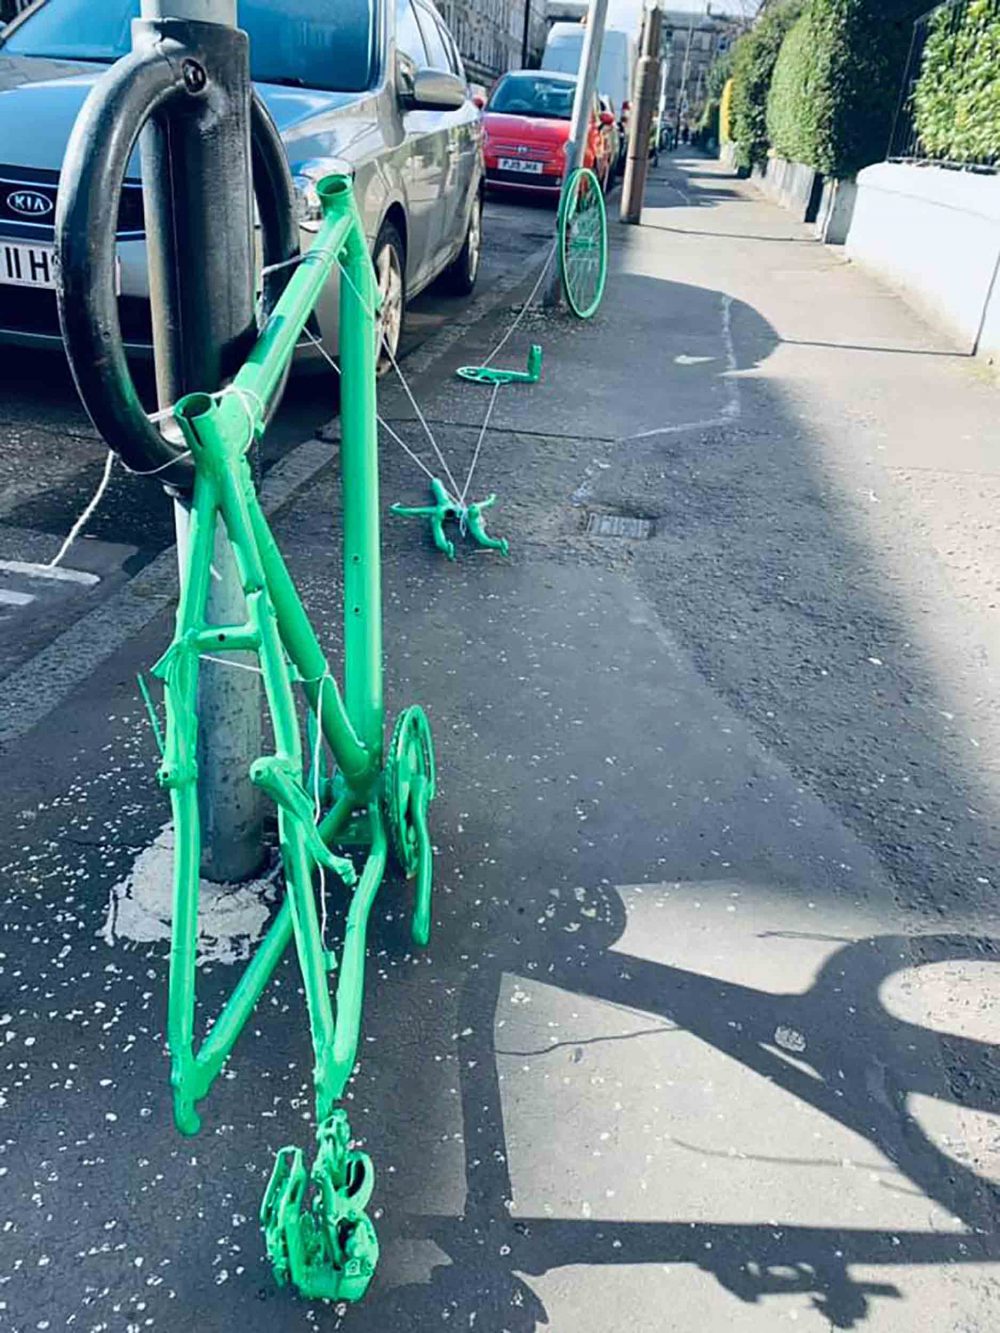 Bike theft art display | Scottish News